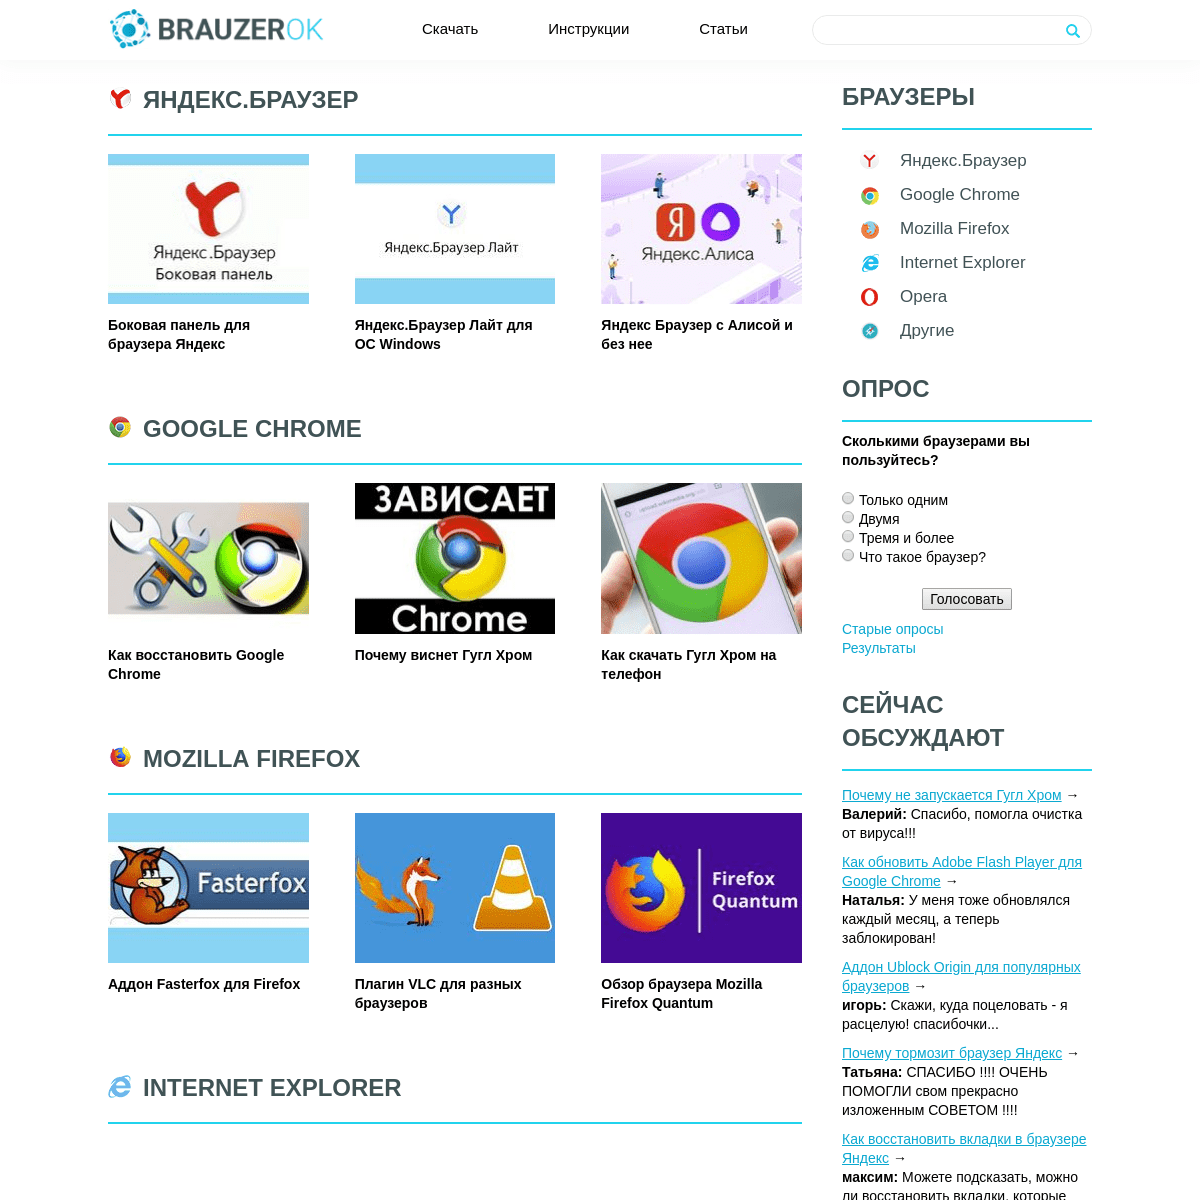 Brauzerok.ru - браузеры и советы по работе с ними